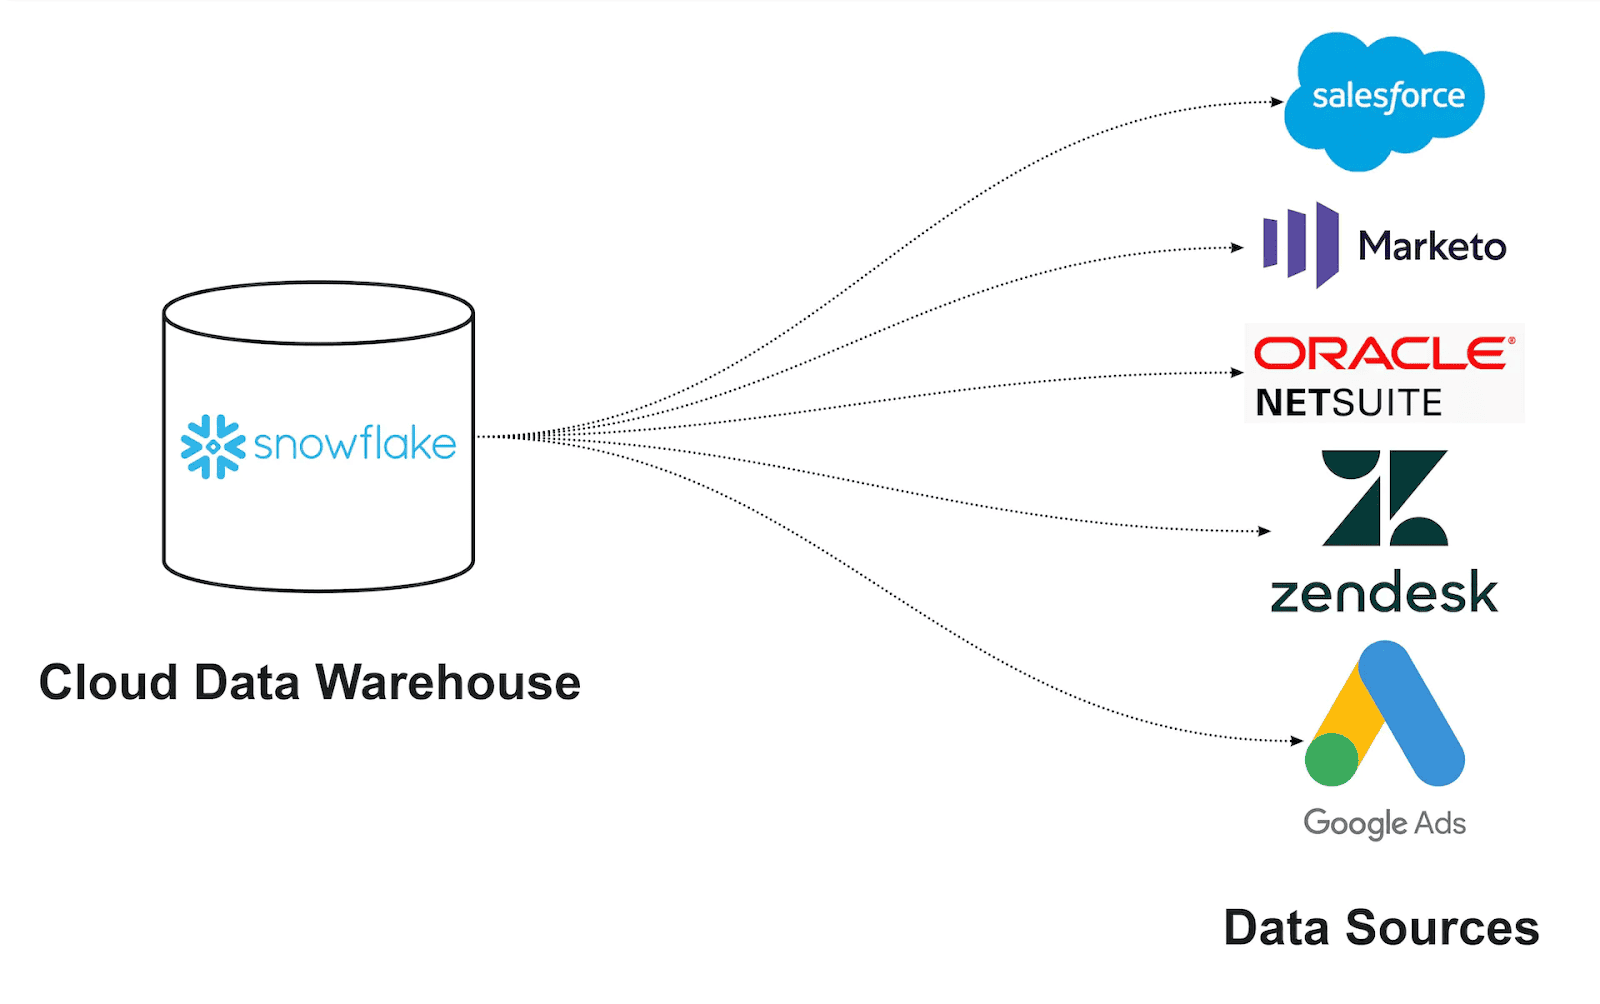 snowflake cloud data warehouse